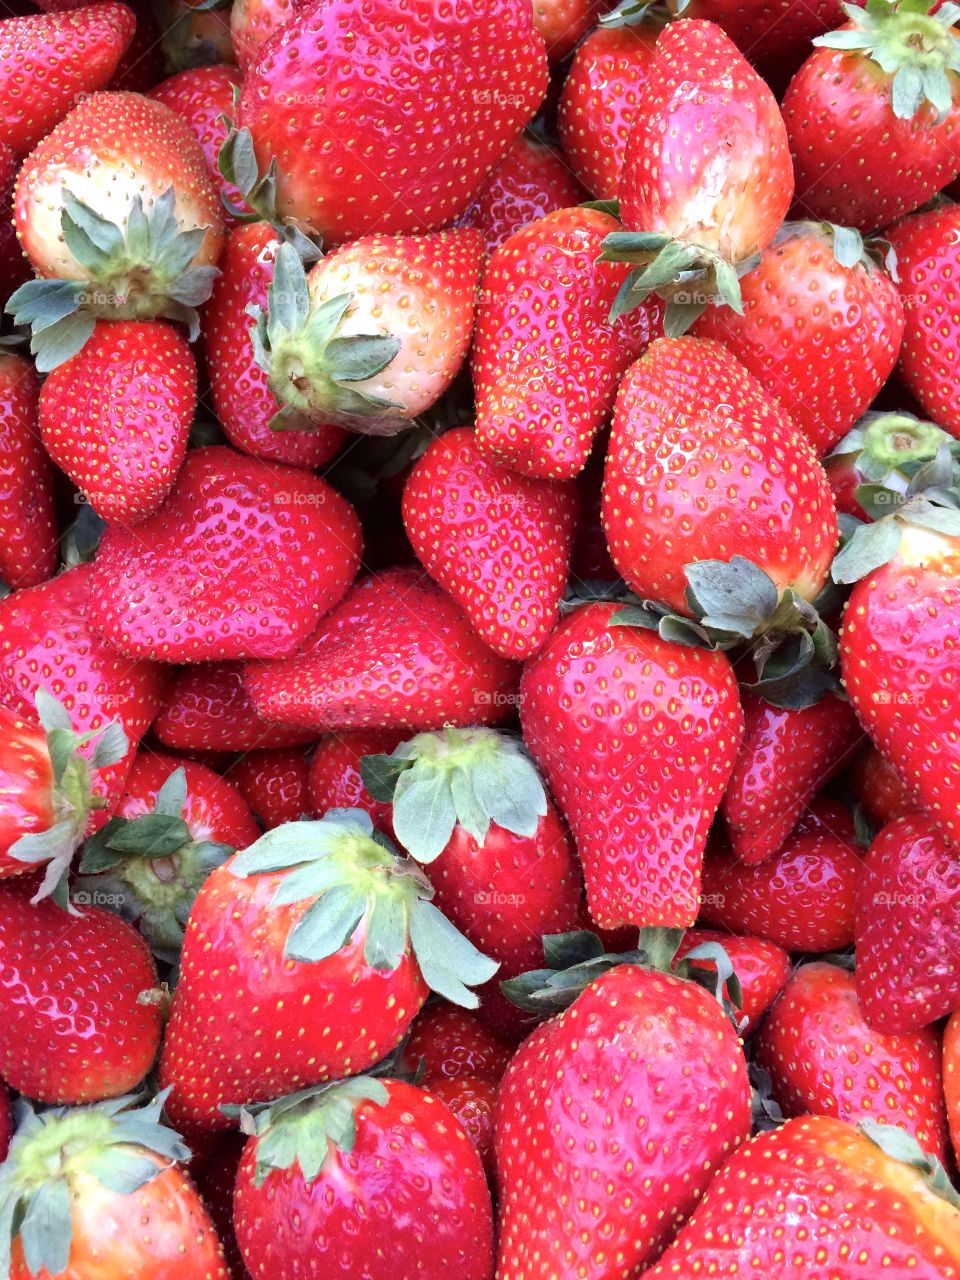 Israeli Strawberries!